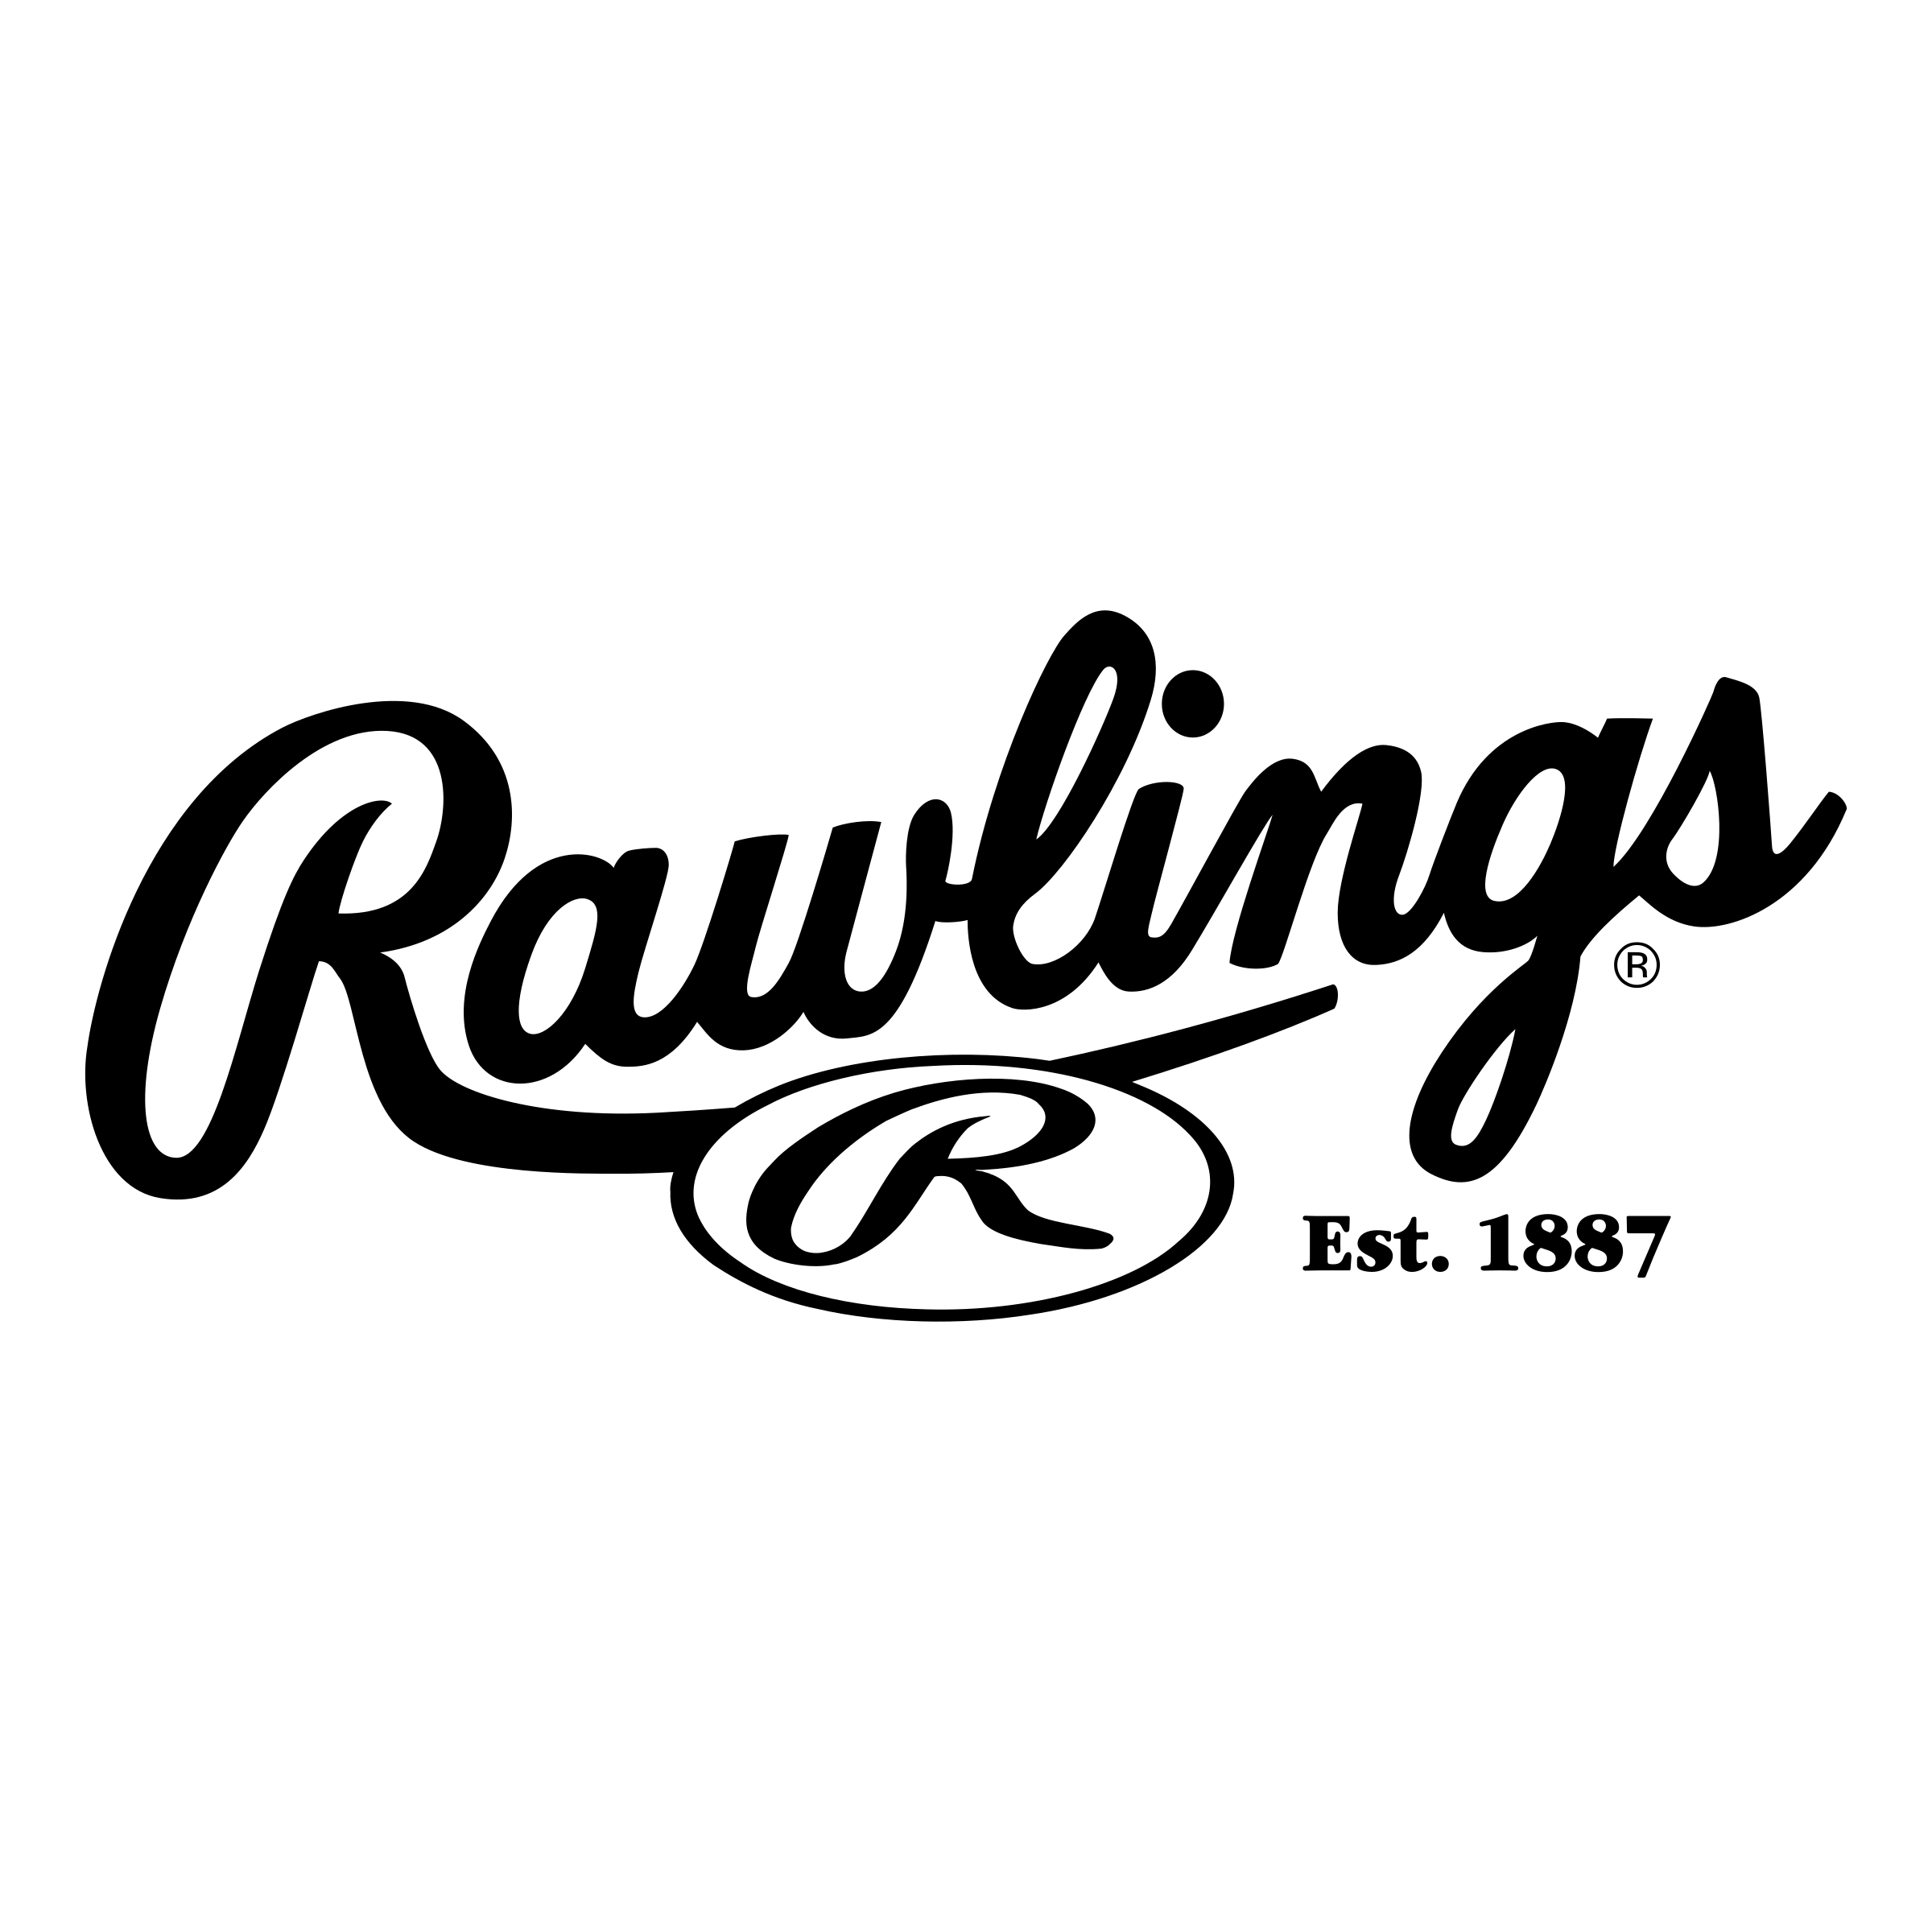 Rawlings Logo - Rawlings Logo PNG Transparent & SVG Vector